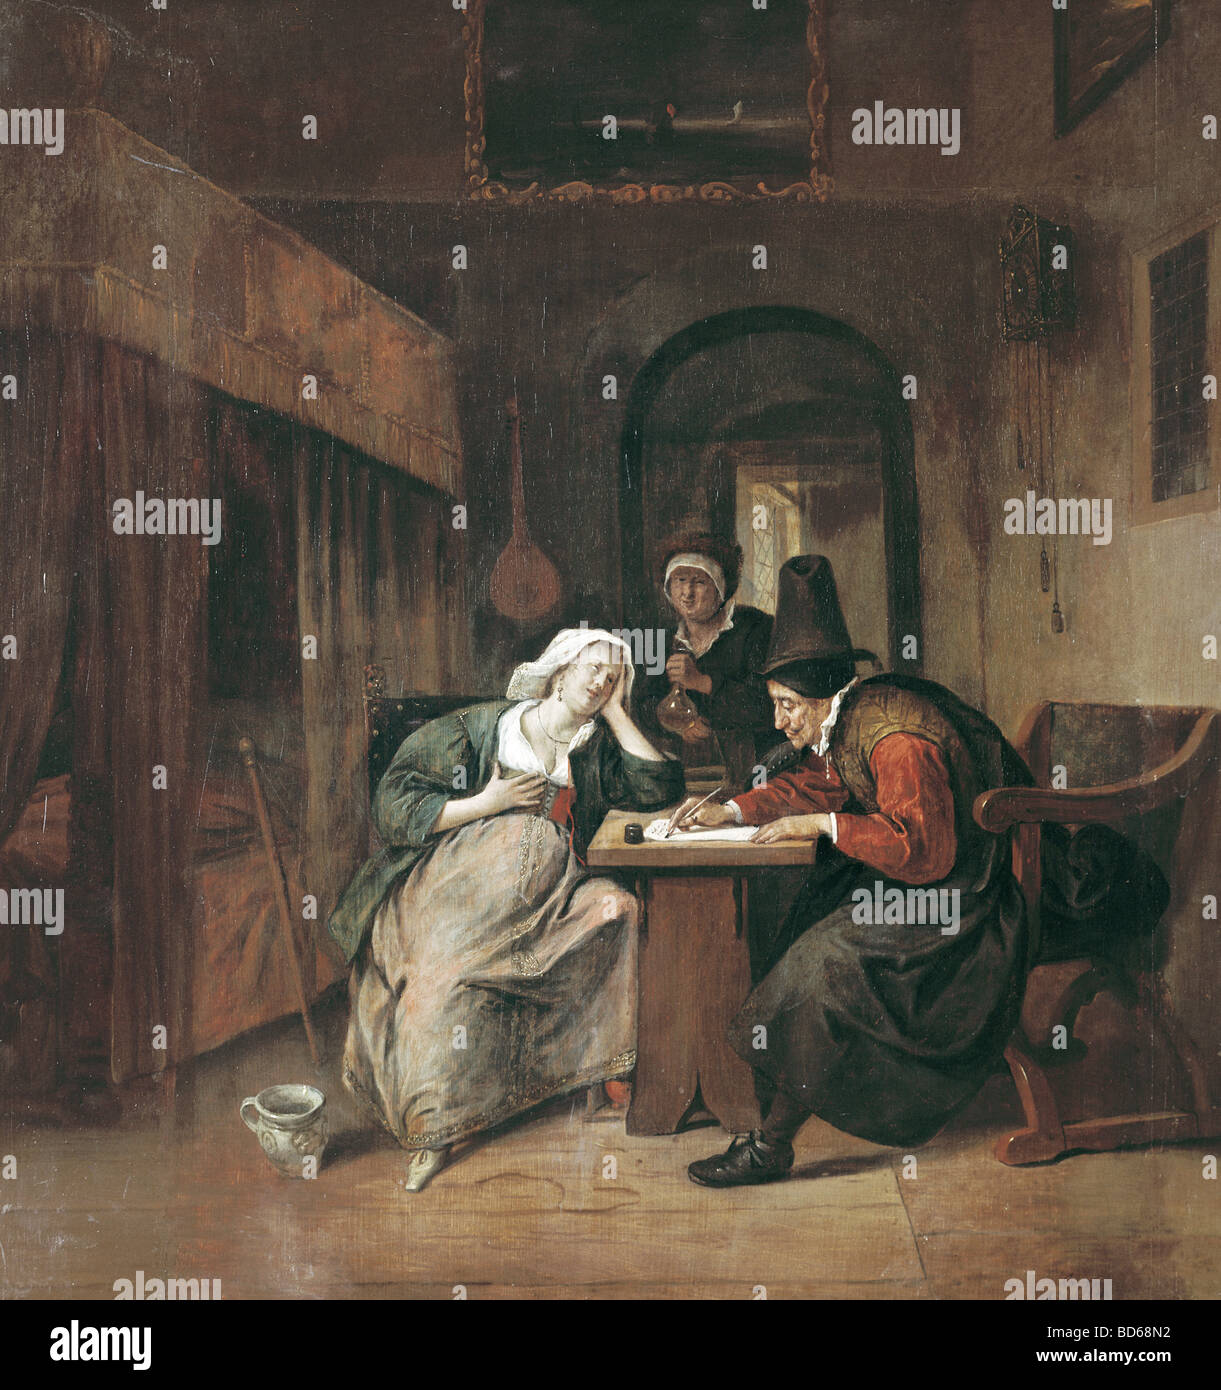 fine arts, Steen, Jan (1626 - 3.2.1679), painting, 'A sick Housewife', Narodni Galerie, Prague, Flemish, Dutch, Baroque, doct Stock Photo